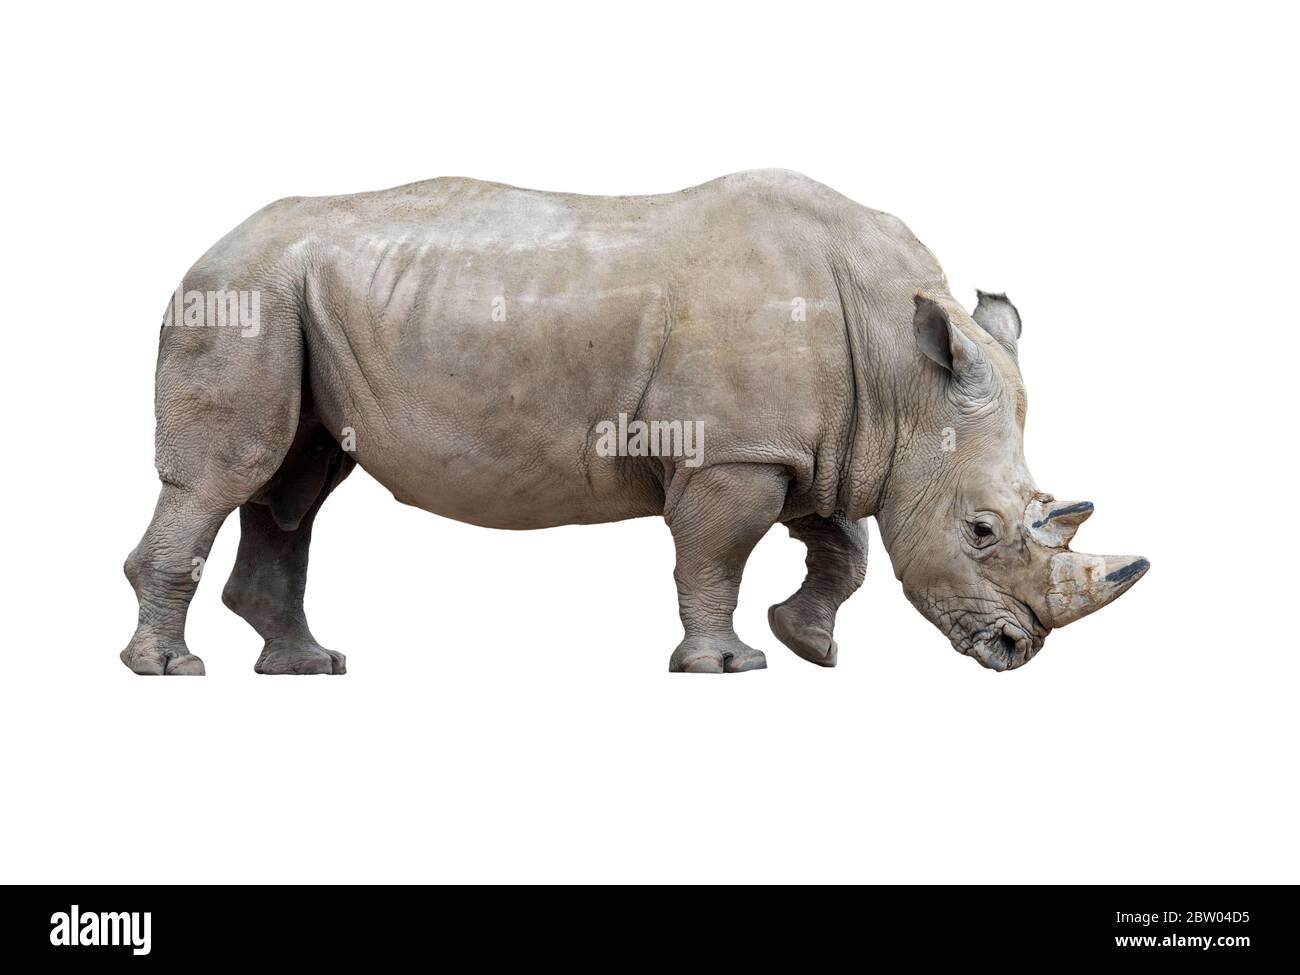 Rinoceronte bianco / rinoceronte bianco (Ceratotherium simum) maschio originario dell'Africa orientale e meridionale su sfondo bianco Foto Stock